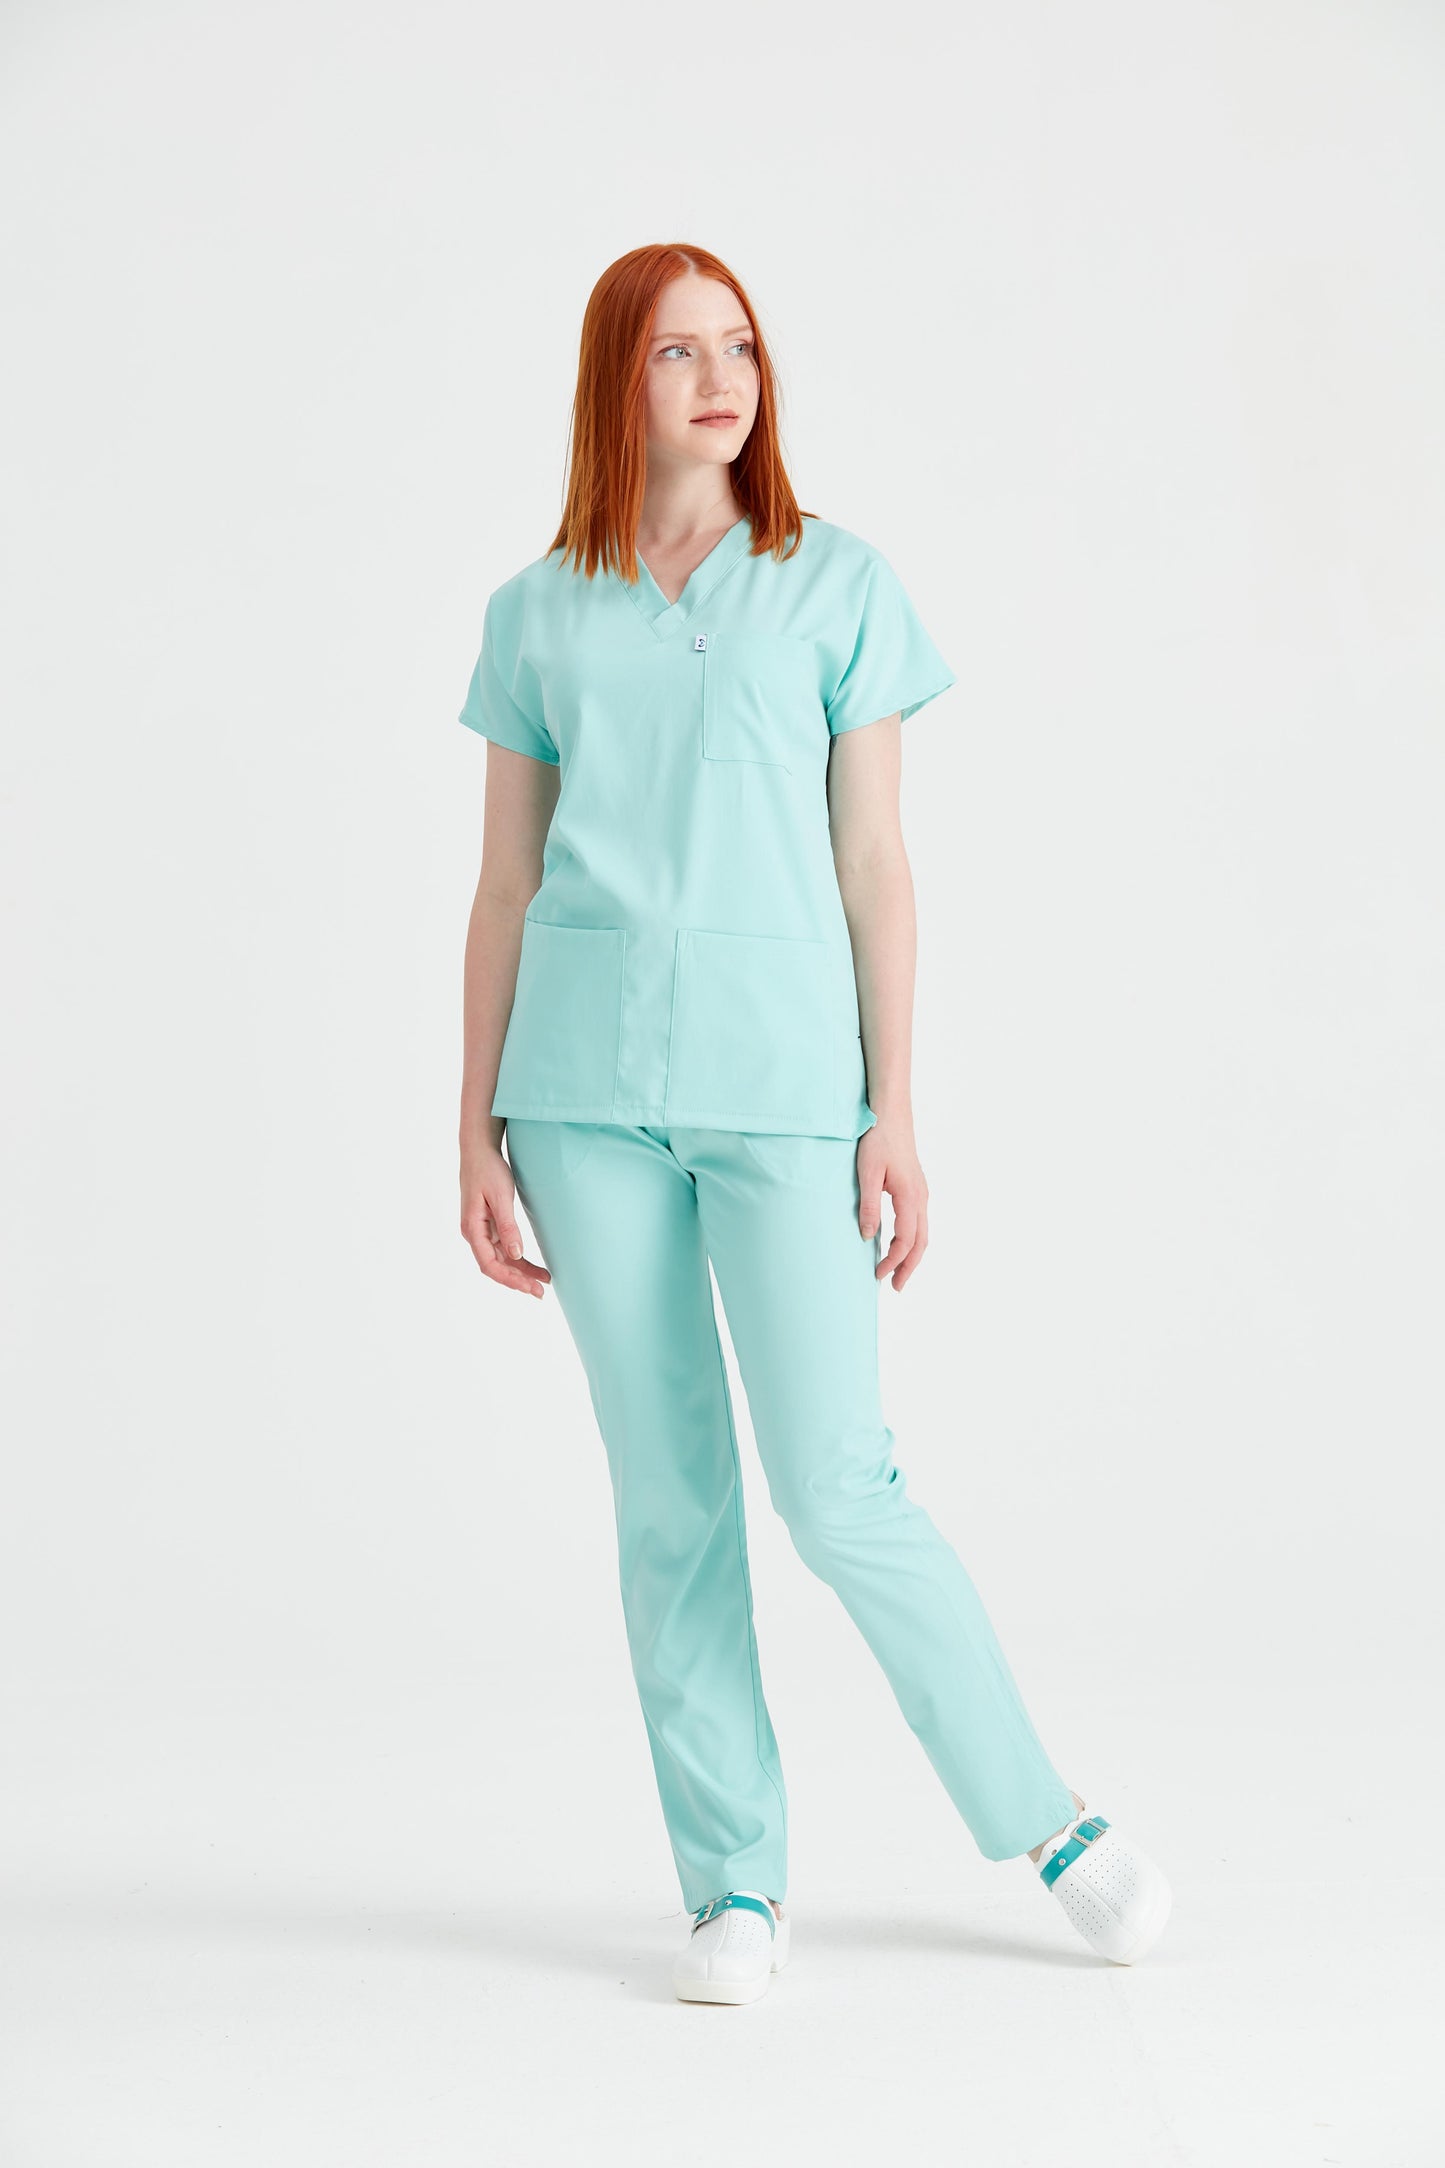 Mint Green Medical Suit, For Women - Mint - Classic Model